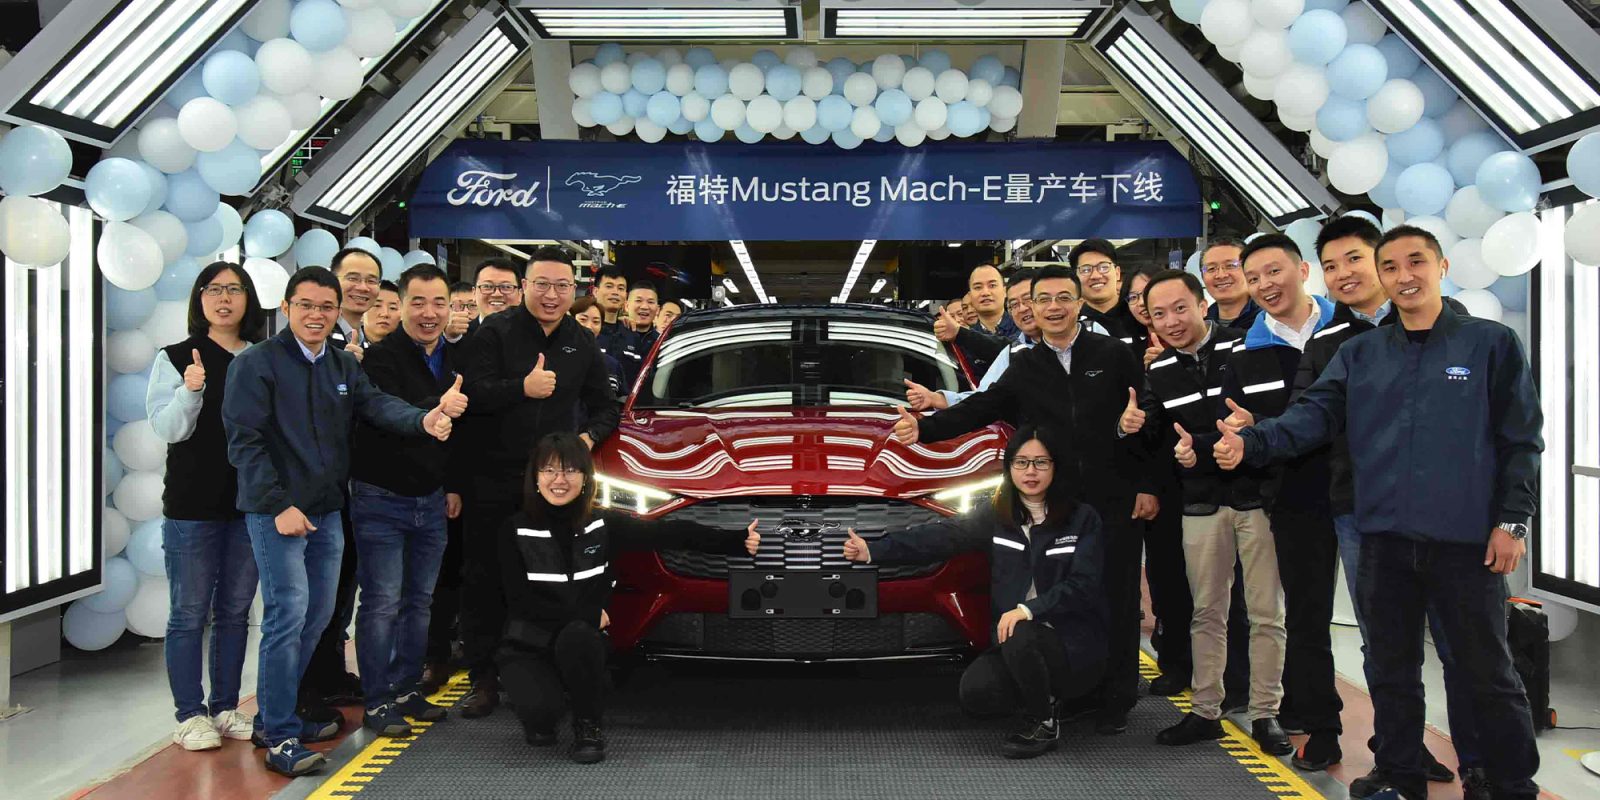 Mustang Mach-E China